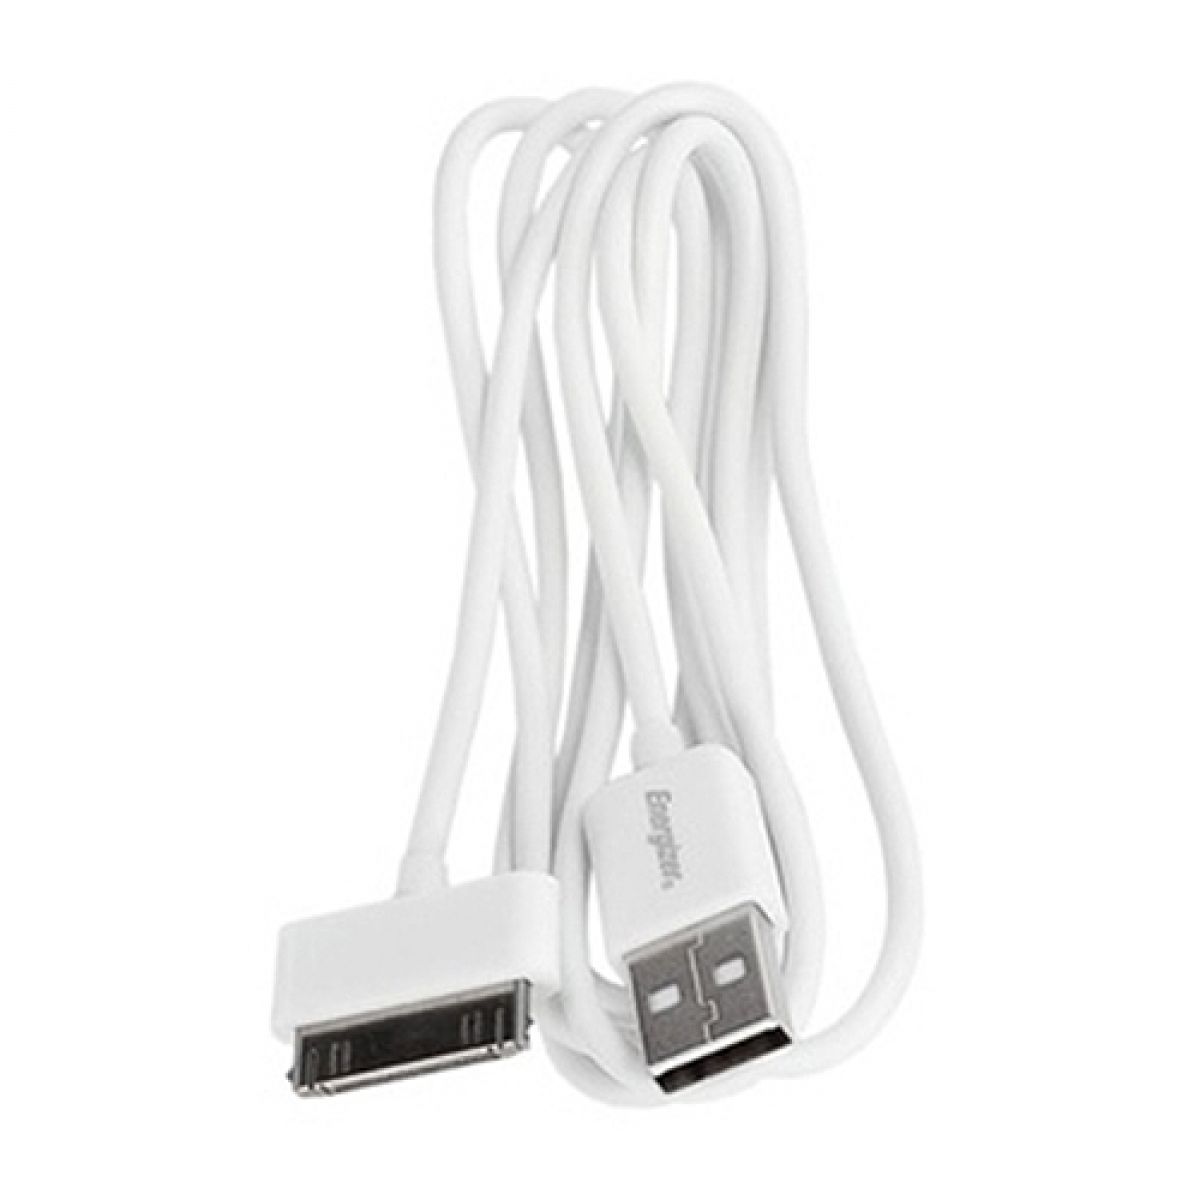  Cablu USB Energizer HIGHTECH pentru iPad, Alb 